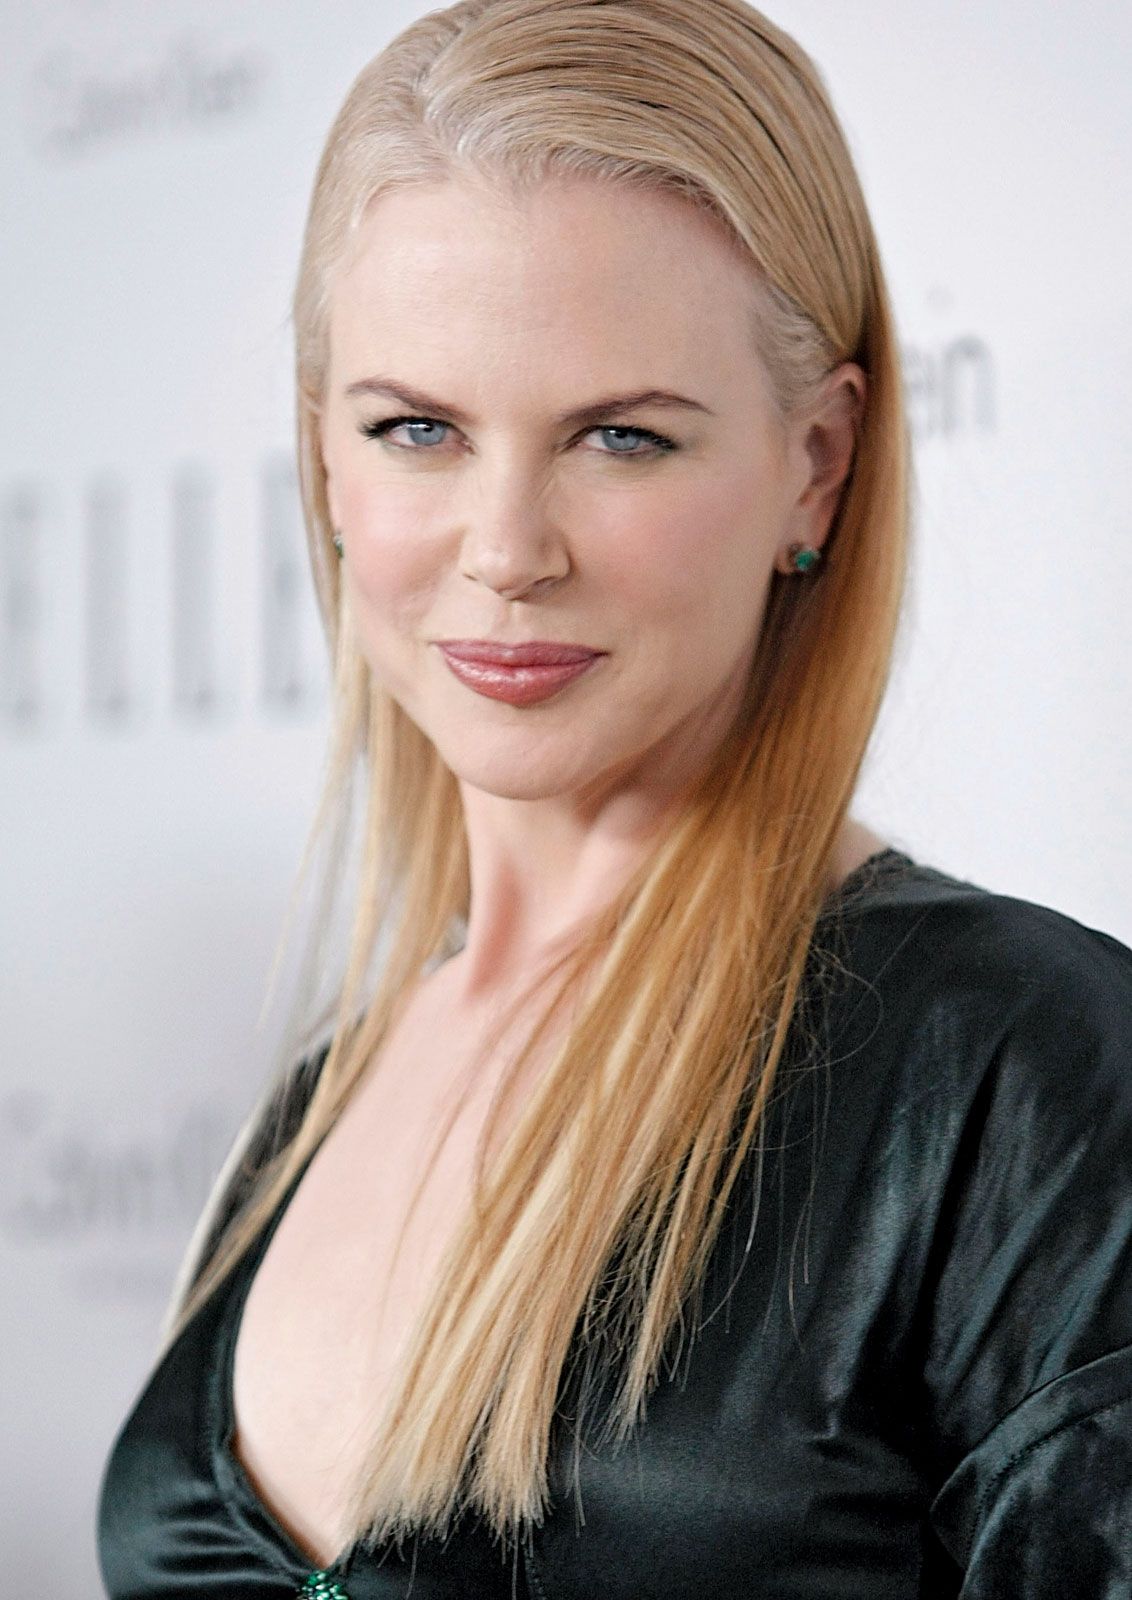 Nicole Kidman - Wikipedia